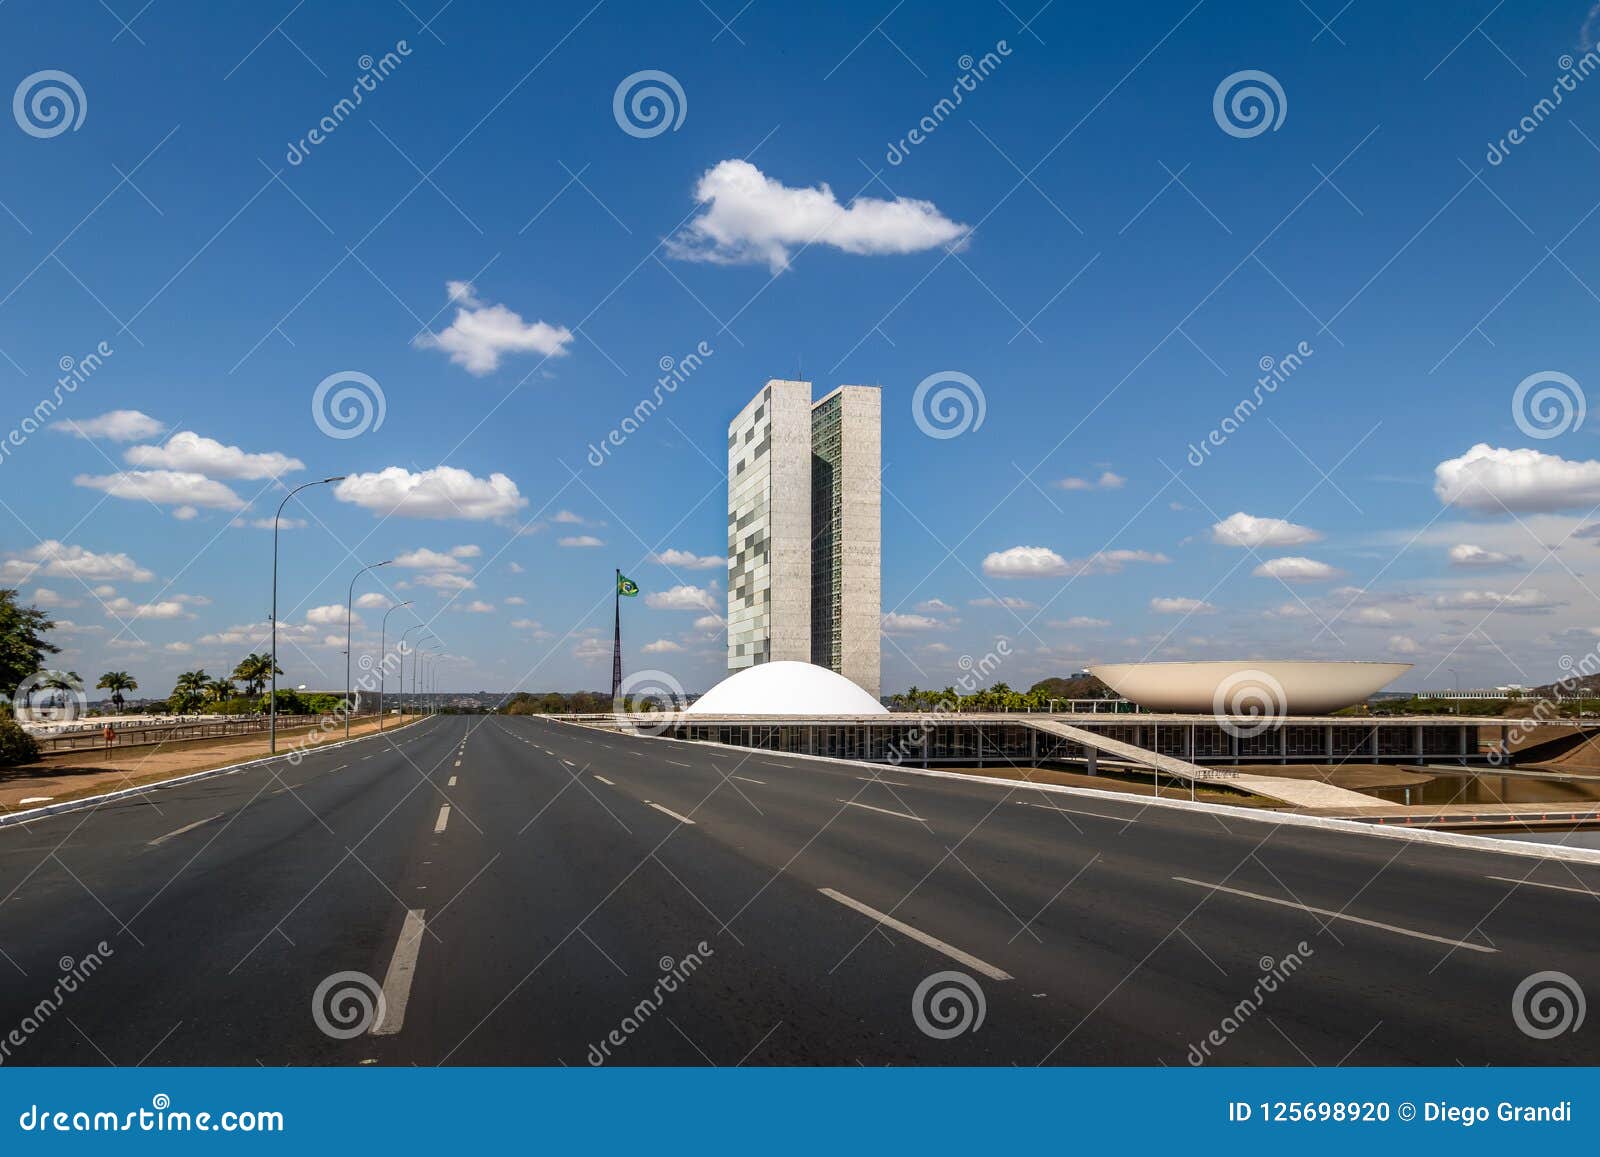 https://thumbs.dreamstime.com/z/monumental-axis-avenue-brazilian-national-congress-brasilia-distrito-federal-brazil-brasilia-brasil-aug-monumental-axis-eixo-125698920.jpg